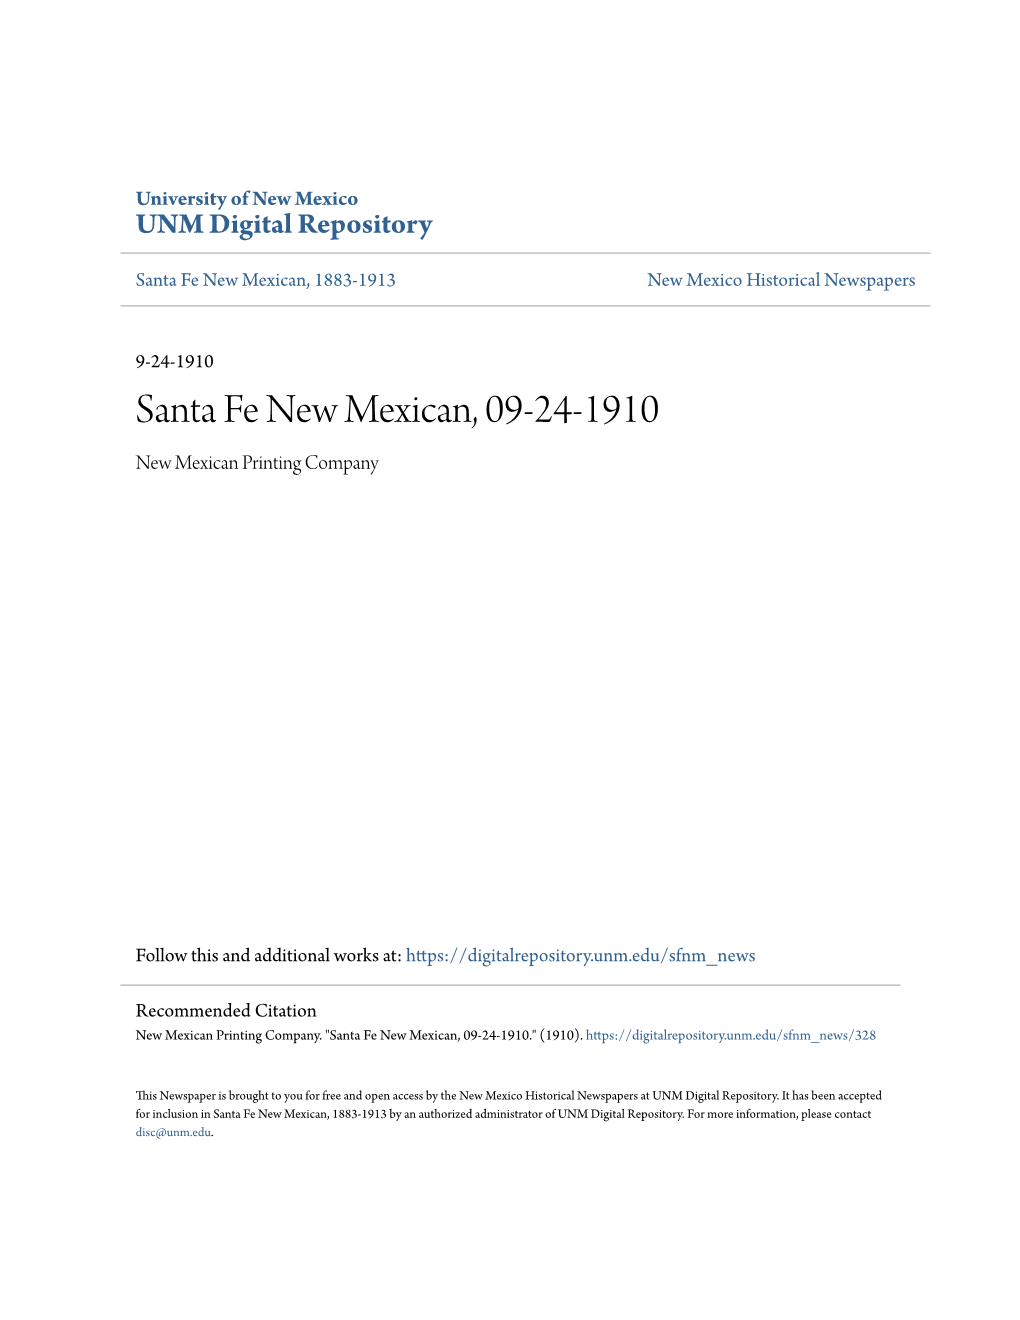 Santa Fe New Mexican, 09-24-1910 New Mexican Printing Company